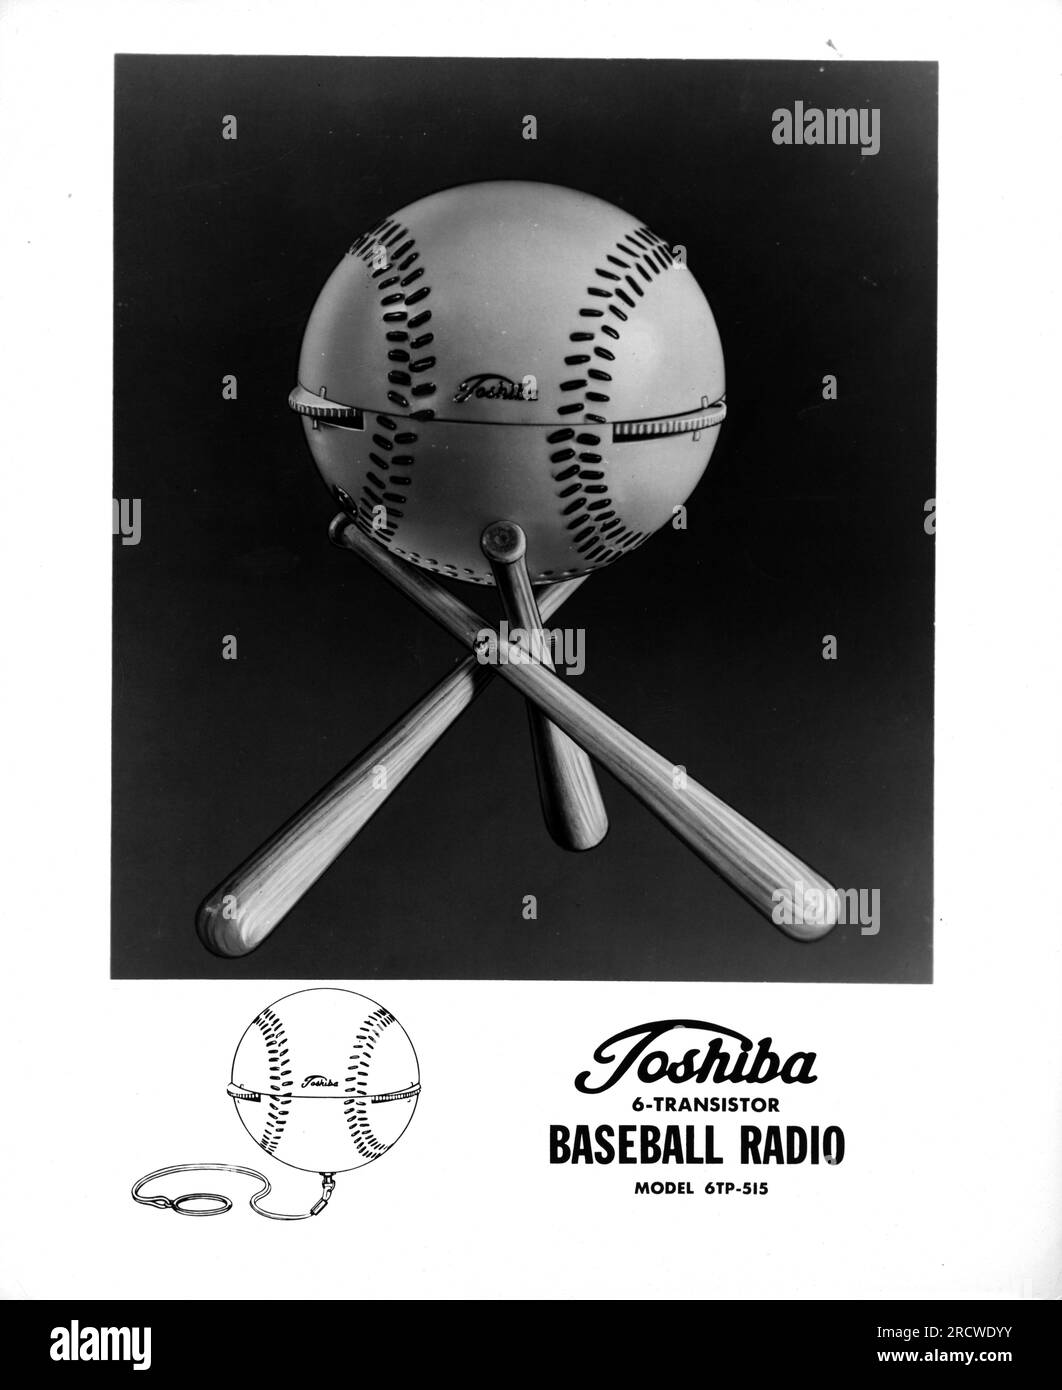 technics, consumer electronics, Toshiba 6 transistor baseball radio 6TP-515, Tokyo, circa 1961, ADDITIONAL-RIGHTS-CLEARANCE-INFO-NOT-AVAILABLE Stock Photo